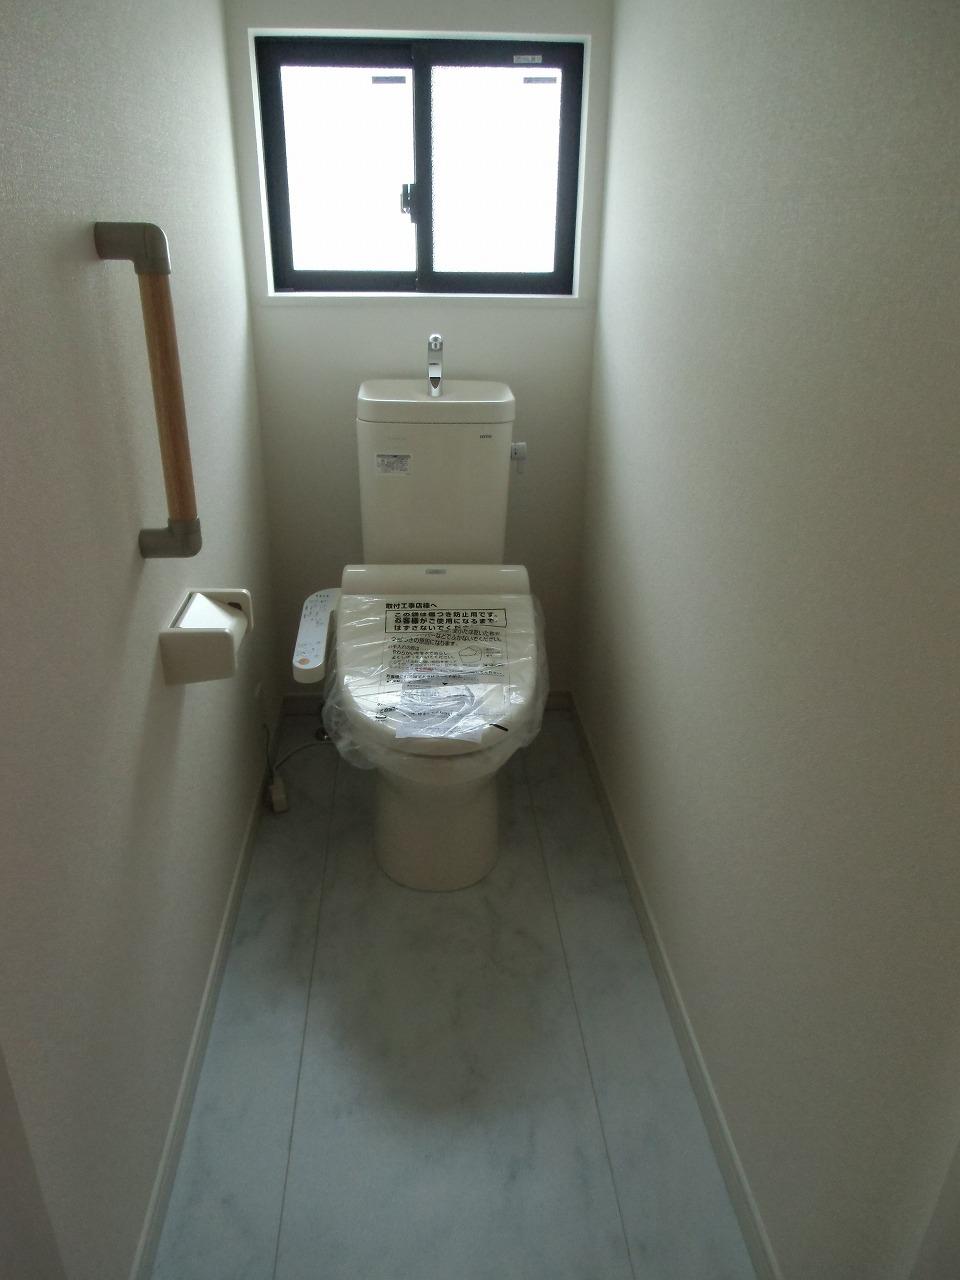 Toilet. 22013.10.31 shooting Building 2